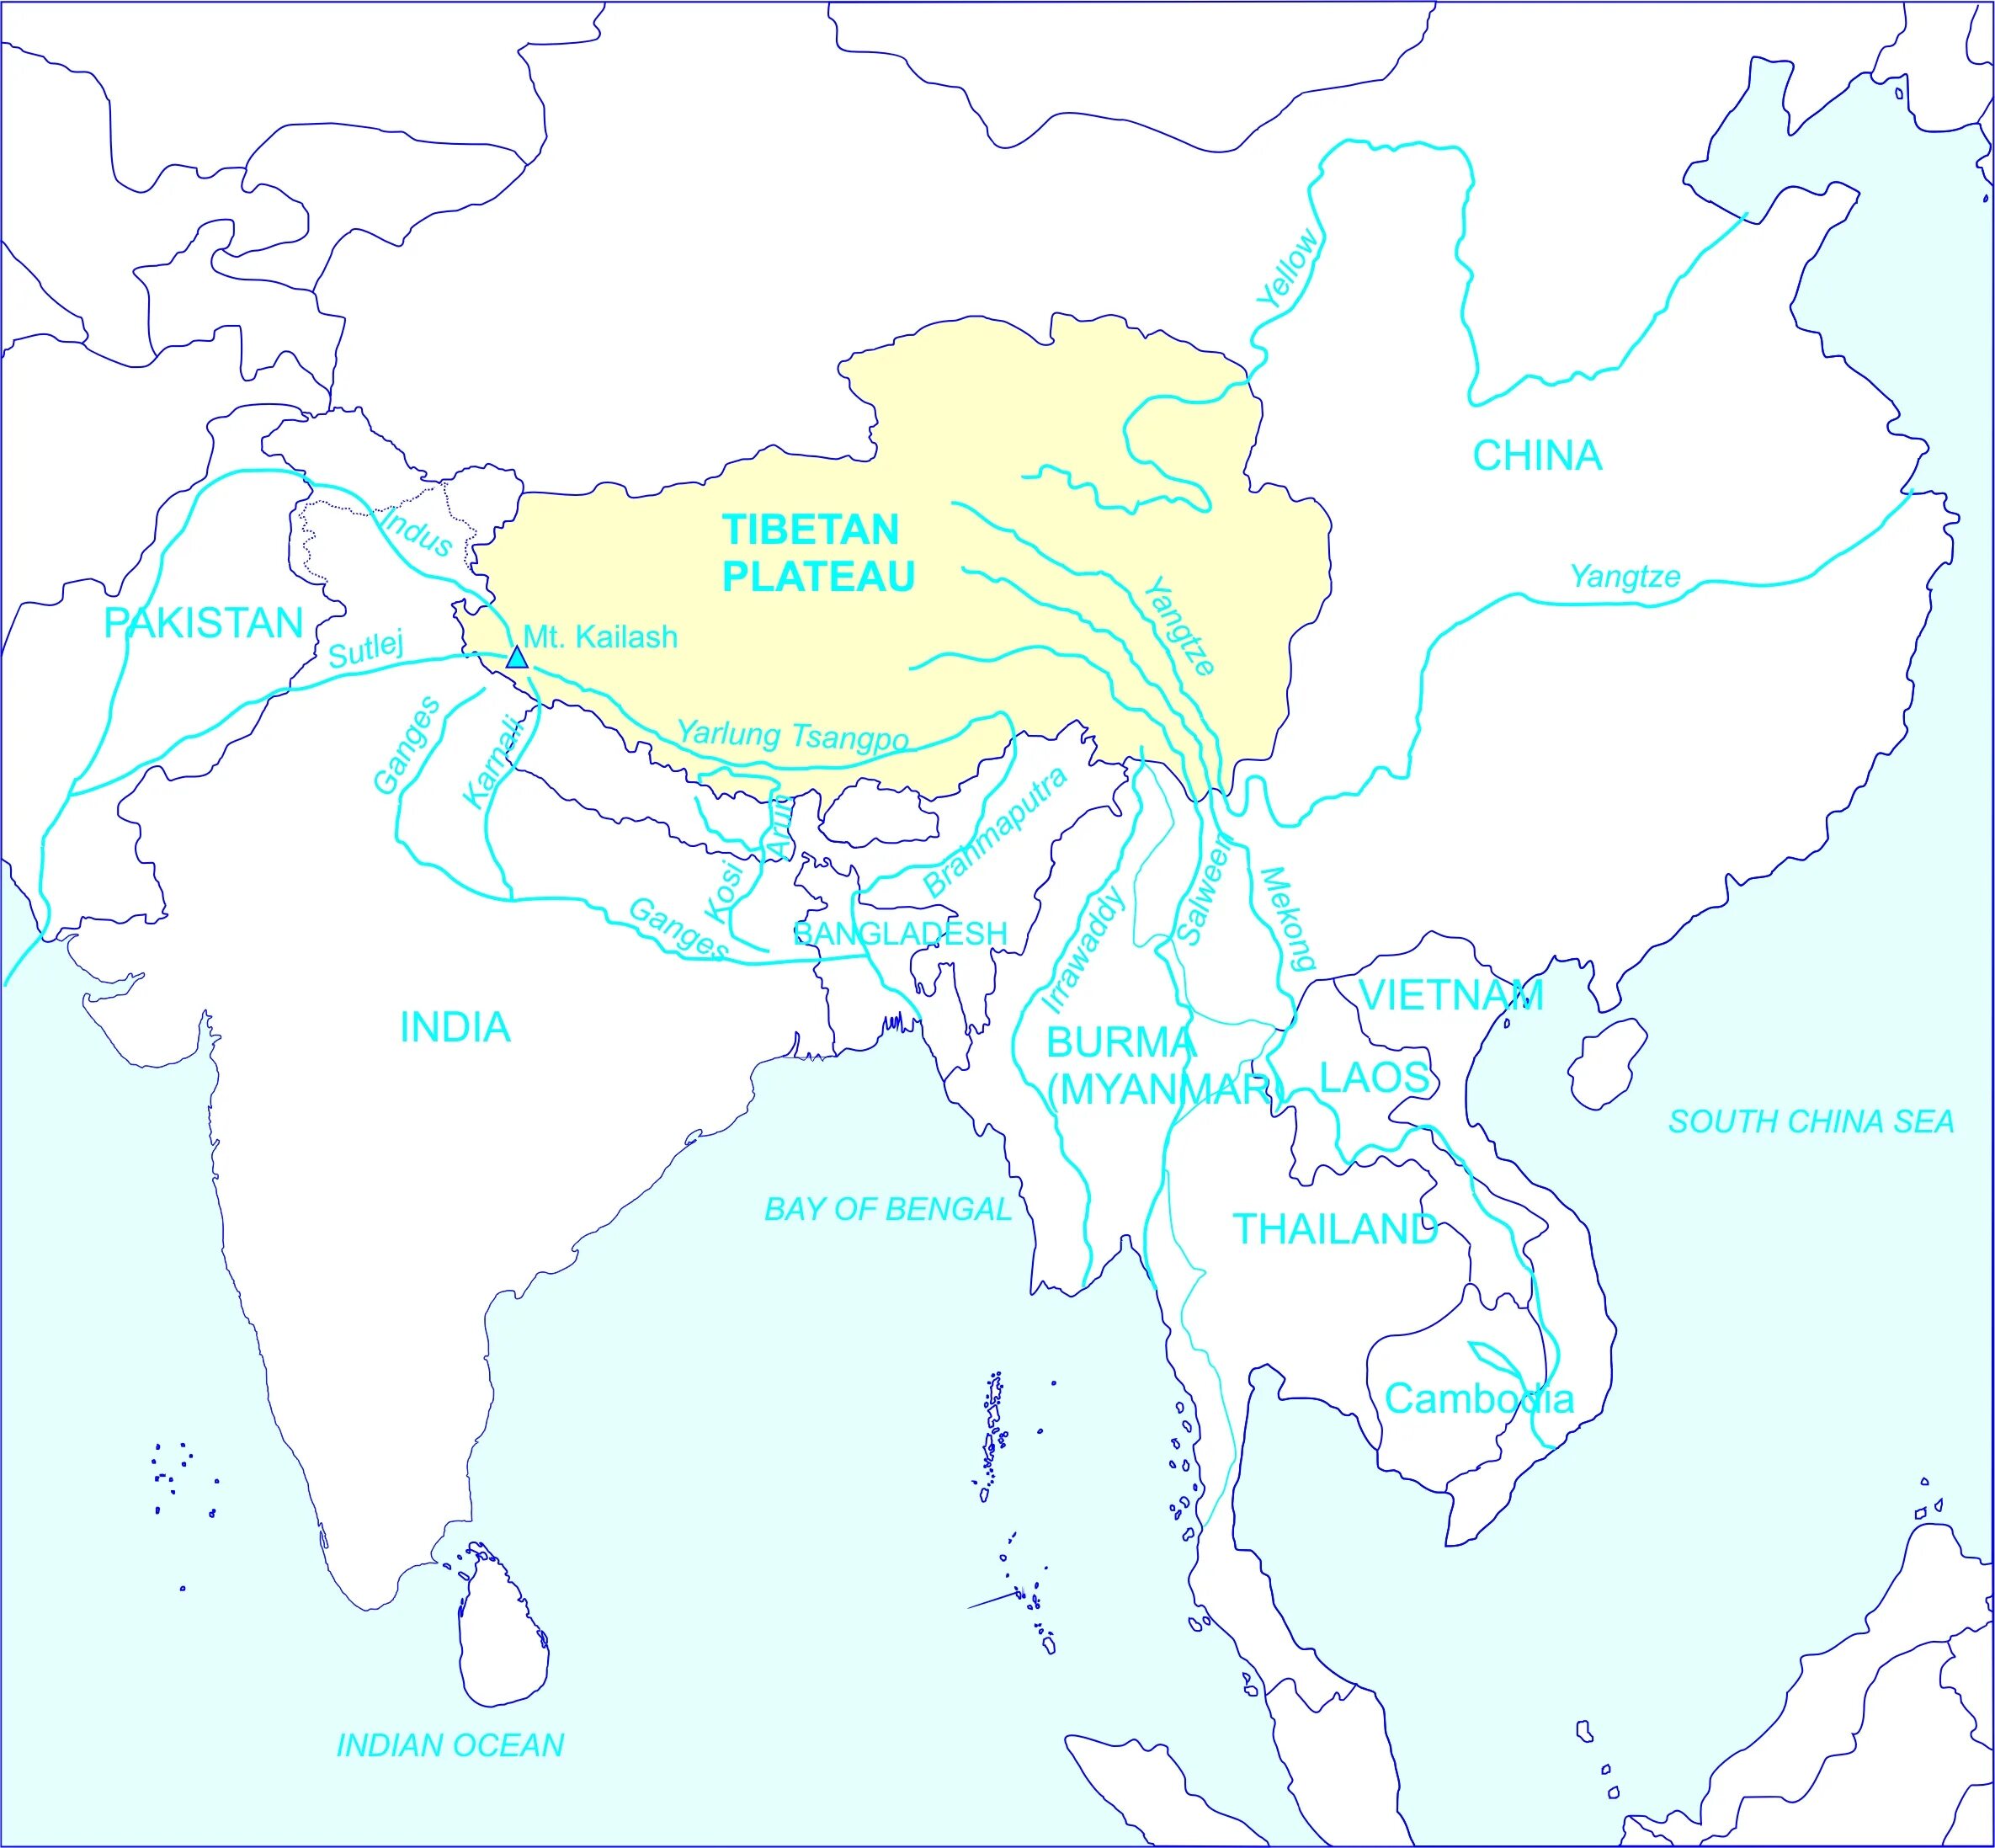 Реки Азии на карте. Основные реки зарубежной Азии на карте. Крупные реки зарубежной Азии на карте. Крупные реки Азии на карте. Реки и озера азии